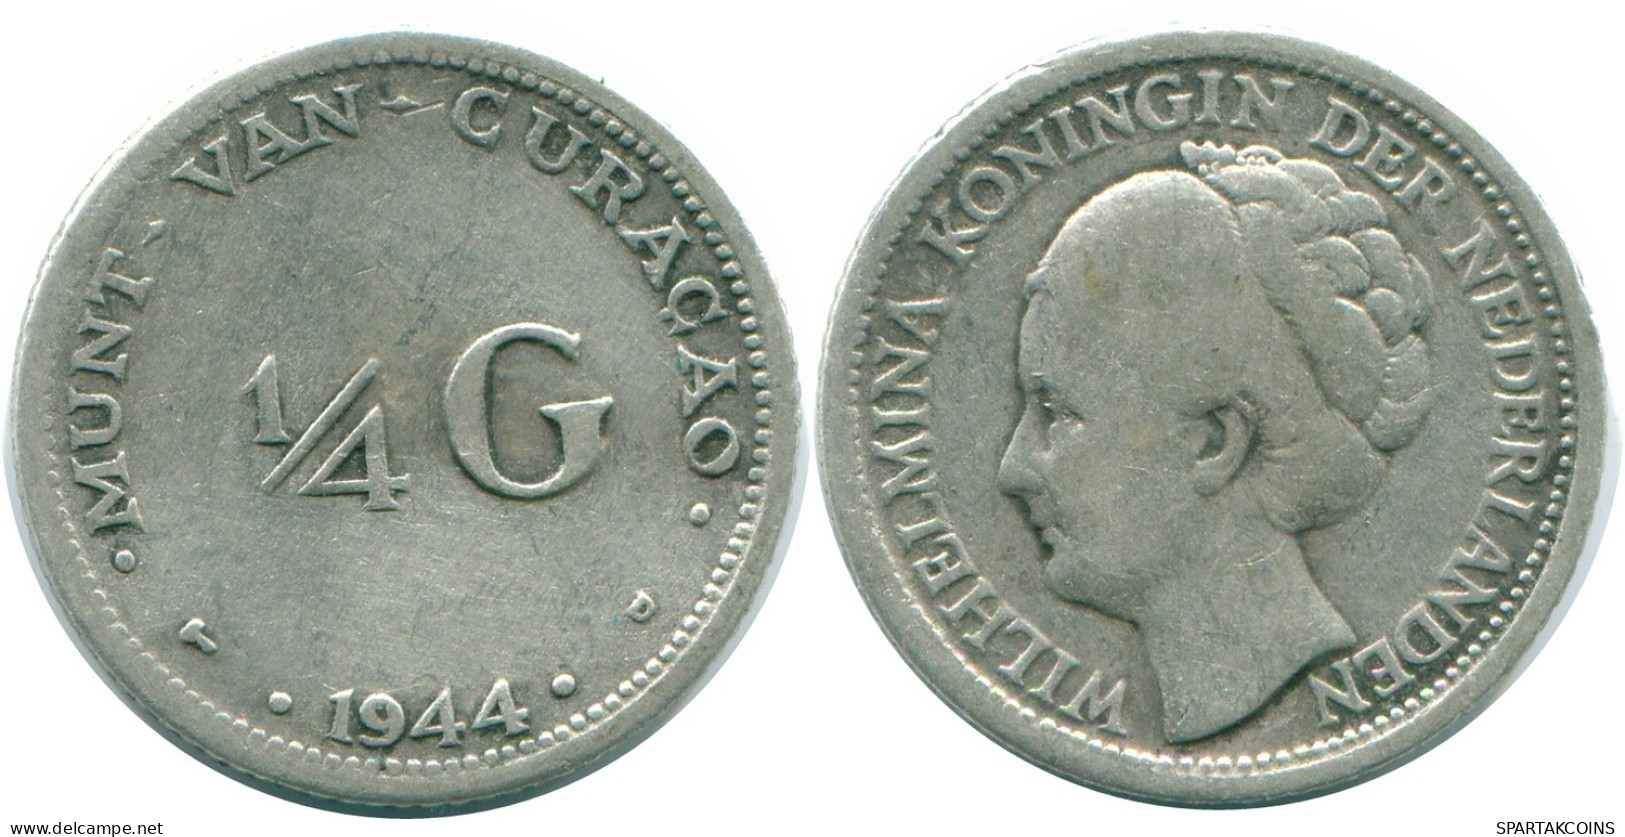 1/4 GULDEN 1944 CURACAO Netherlands SILVER Colonial Coin #NL10659.4.U - Curacao